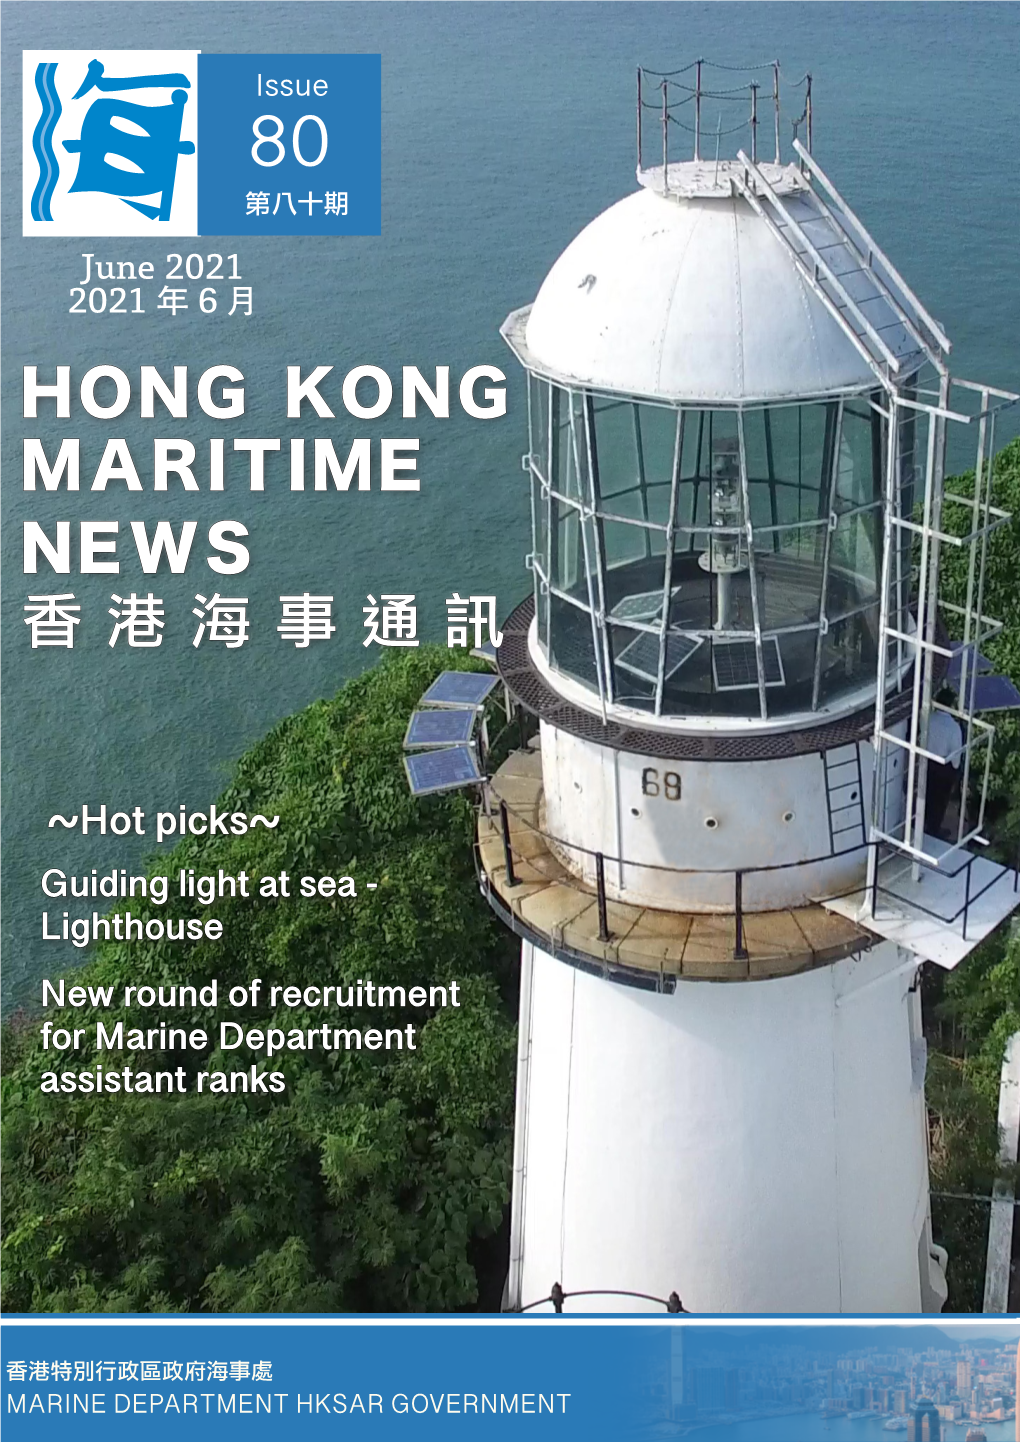 HK Maritime News Issue 80